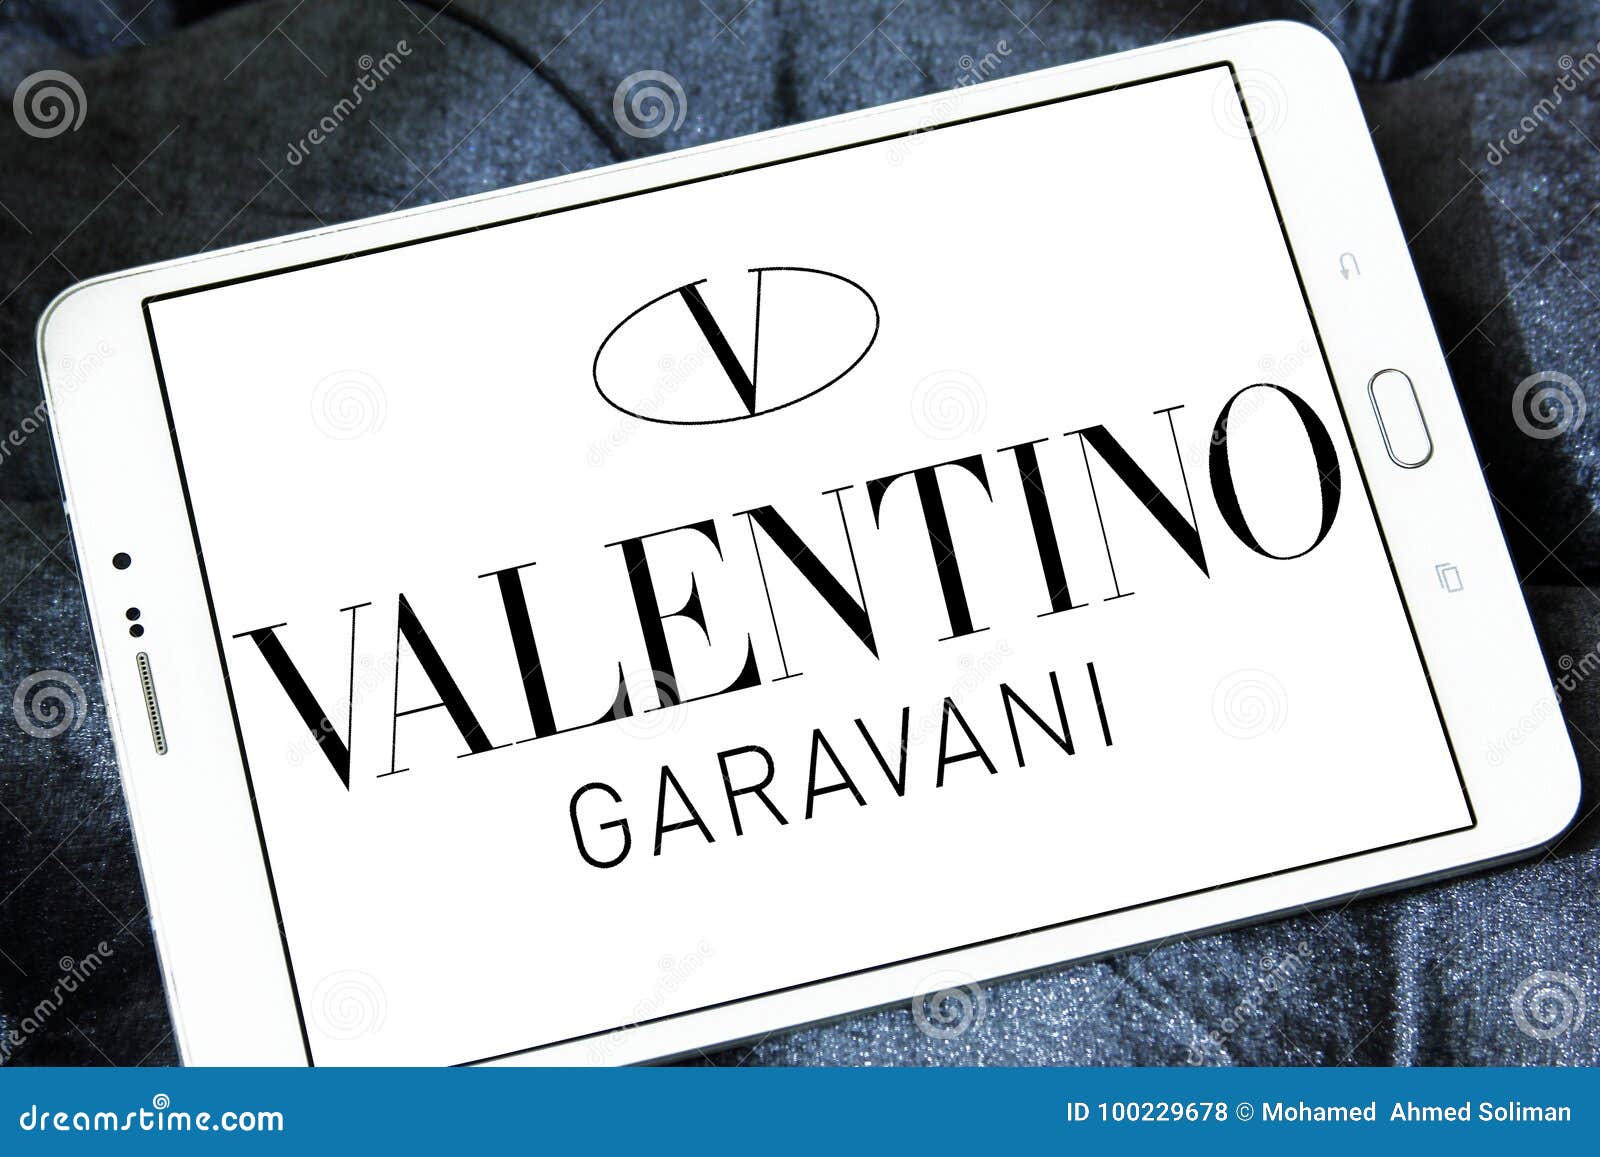 Garavani Logo Editorial Photo - Image of popular, retail: